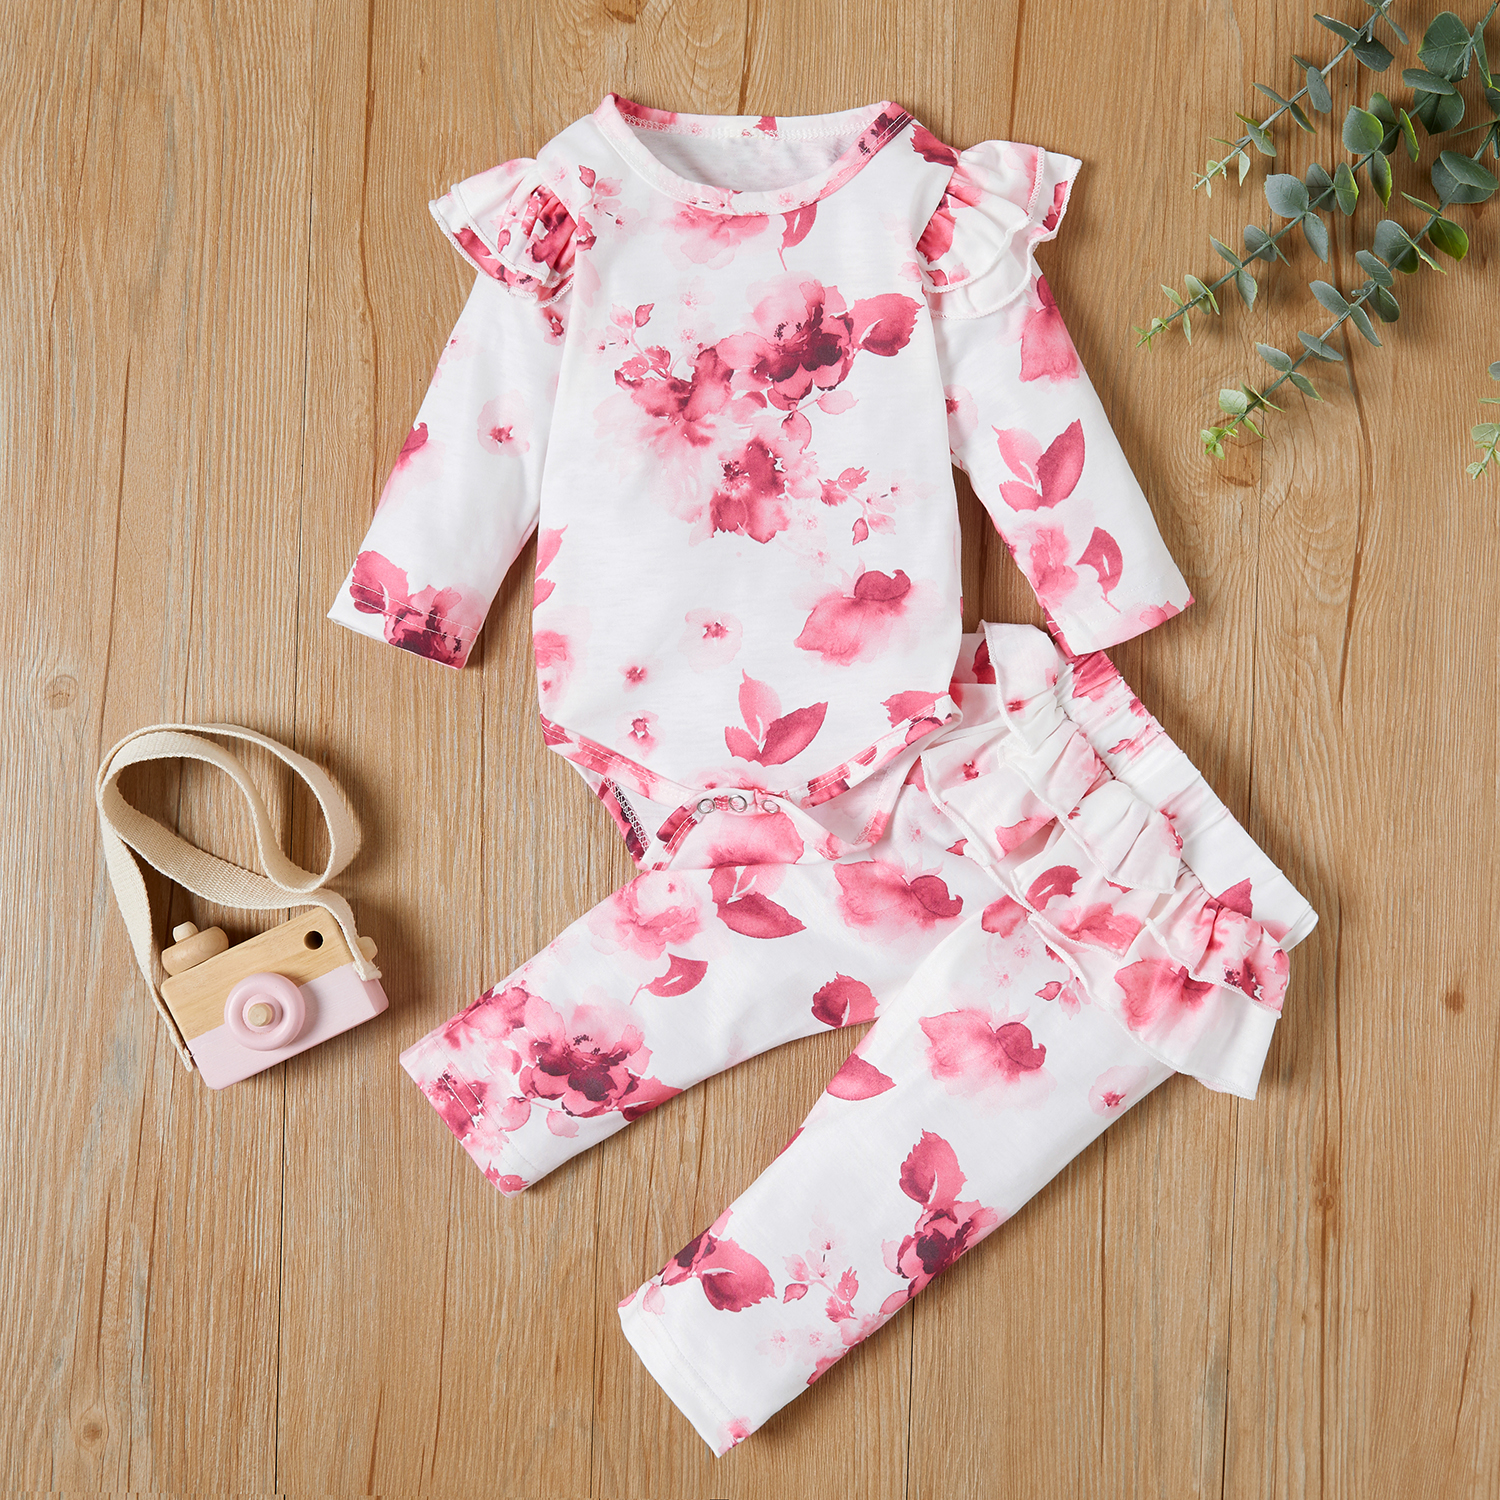 2pcs Baby Girl Sweet Tie dye Baby's Sets  Autumn Romper Long Sleeve Tops Newborn Clothing